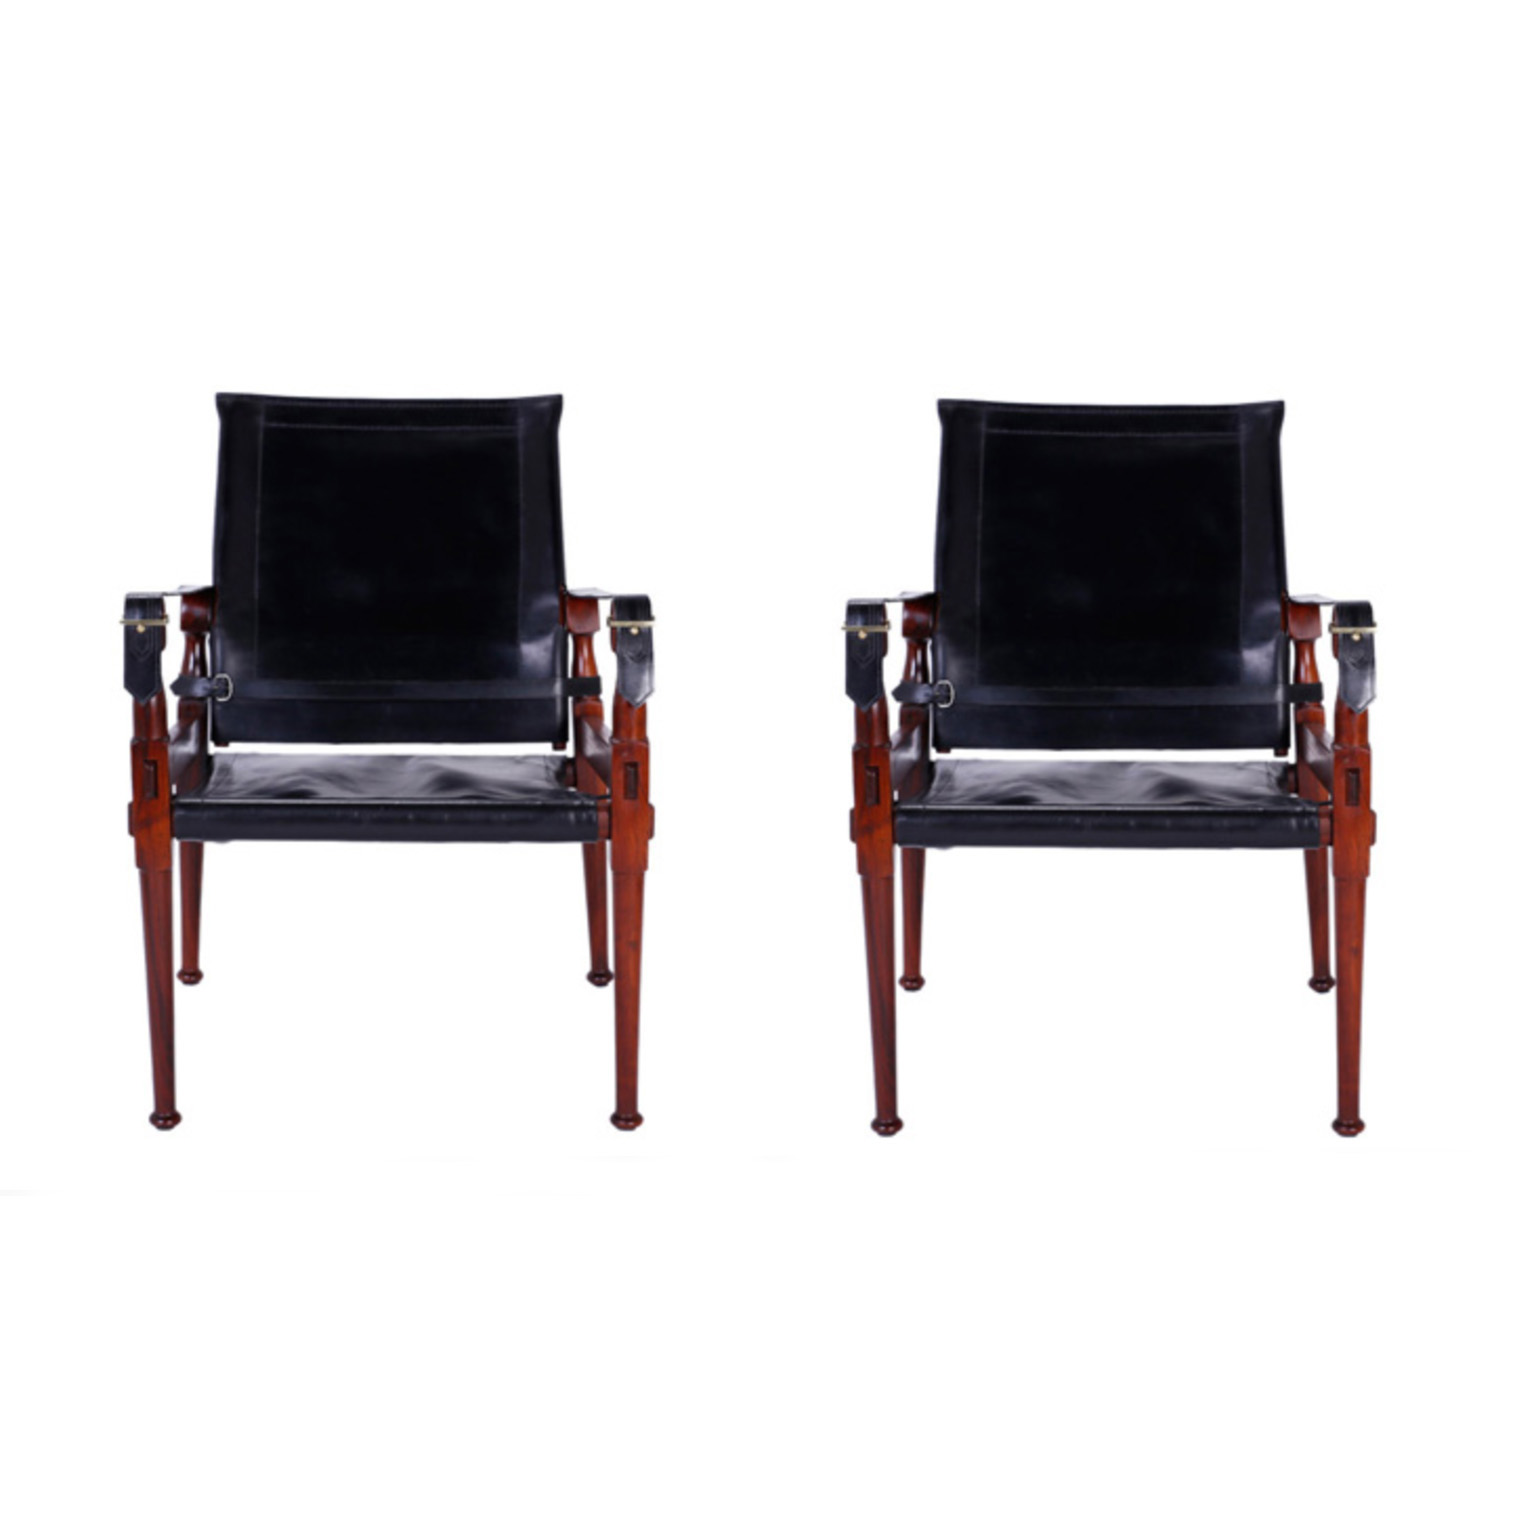 Pair of Vintage Safari Chairs